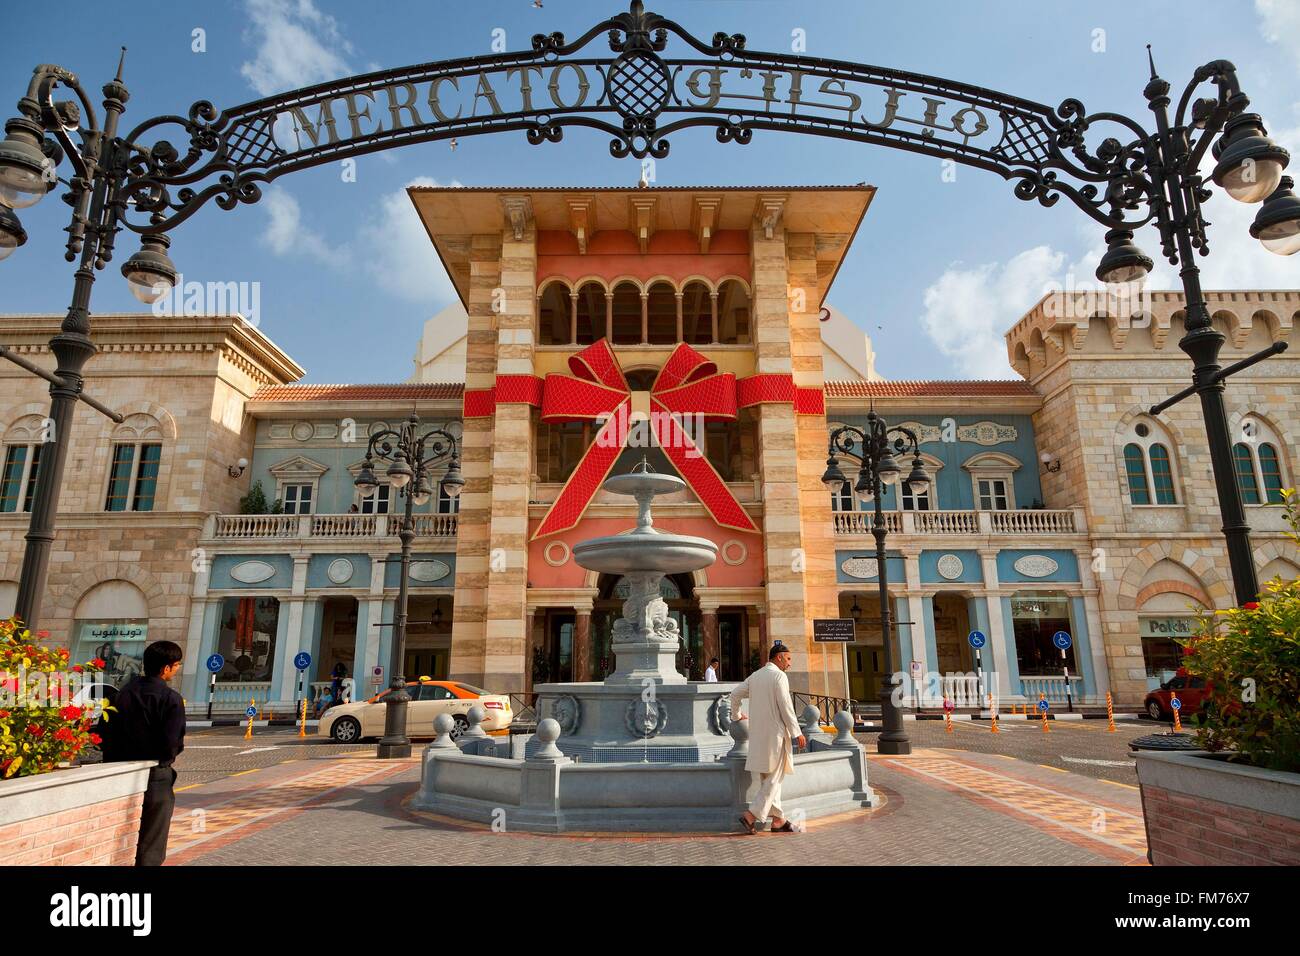 Vereinigte Arabische Emirate, Dubai, Mercato Shopping Mall Stockfoto